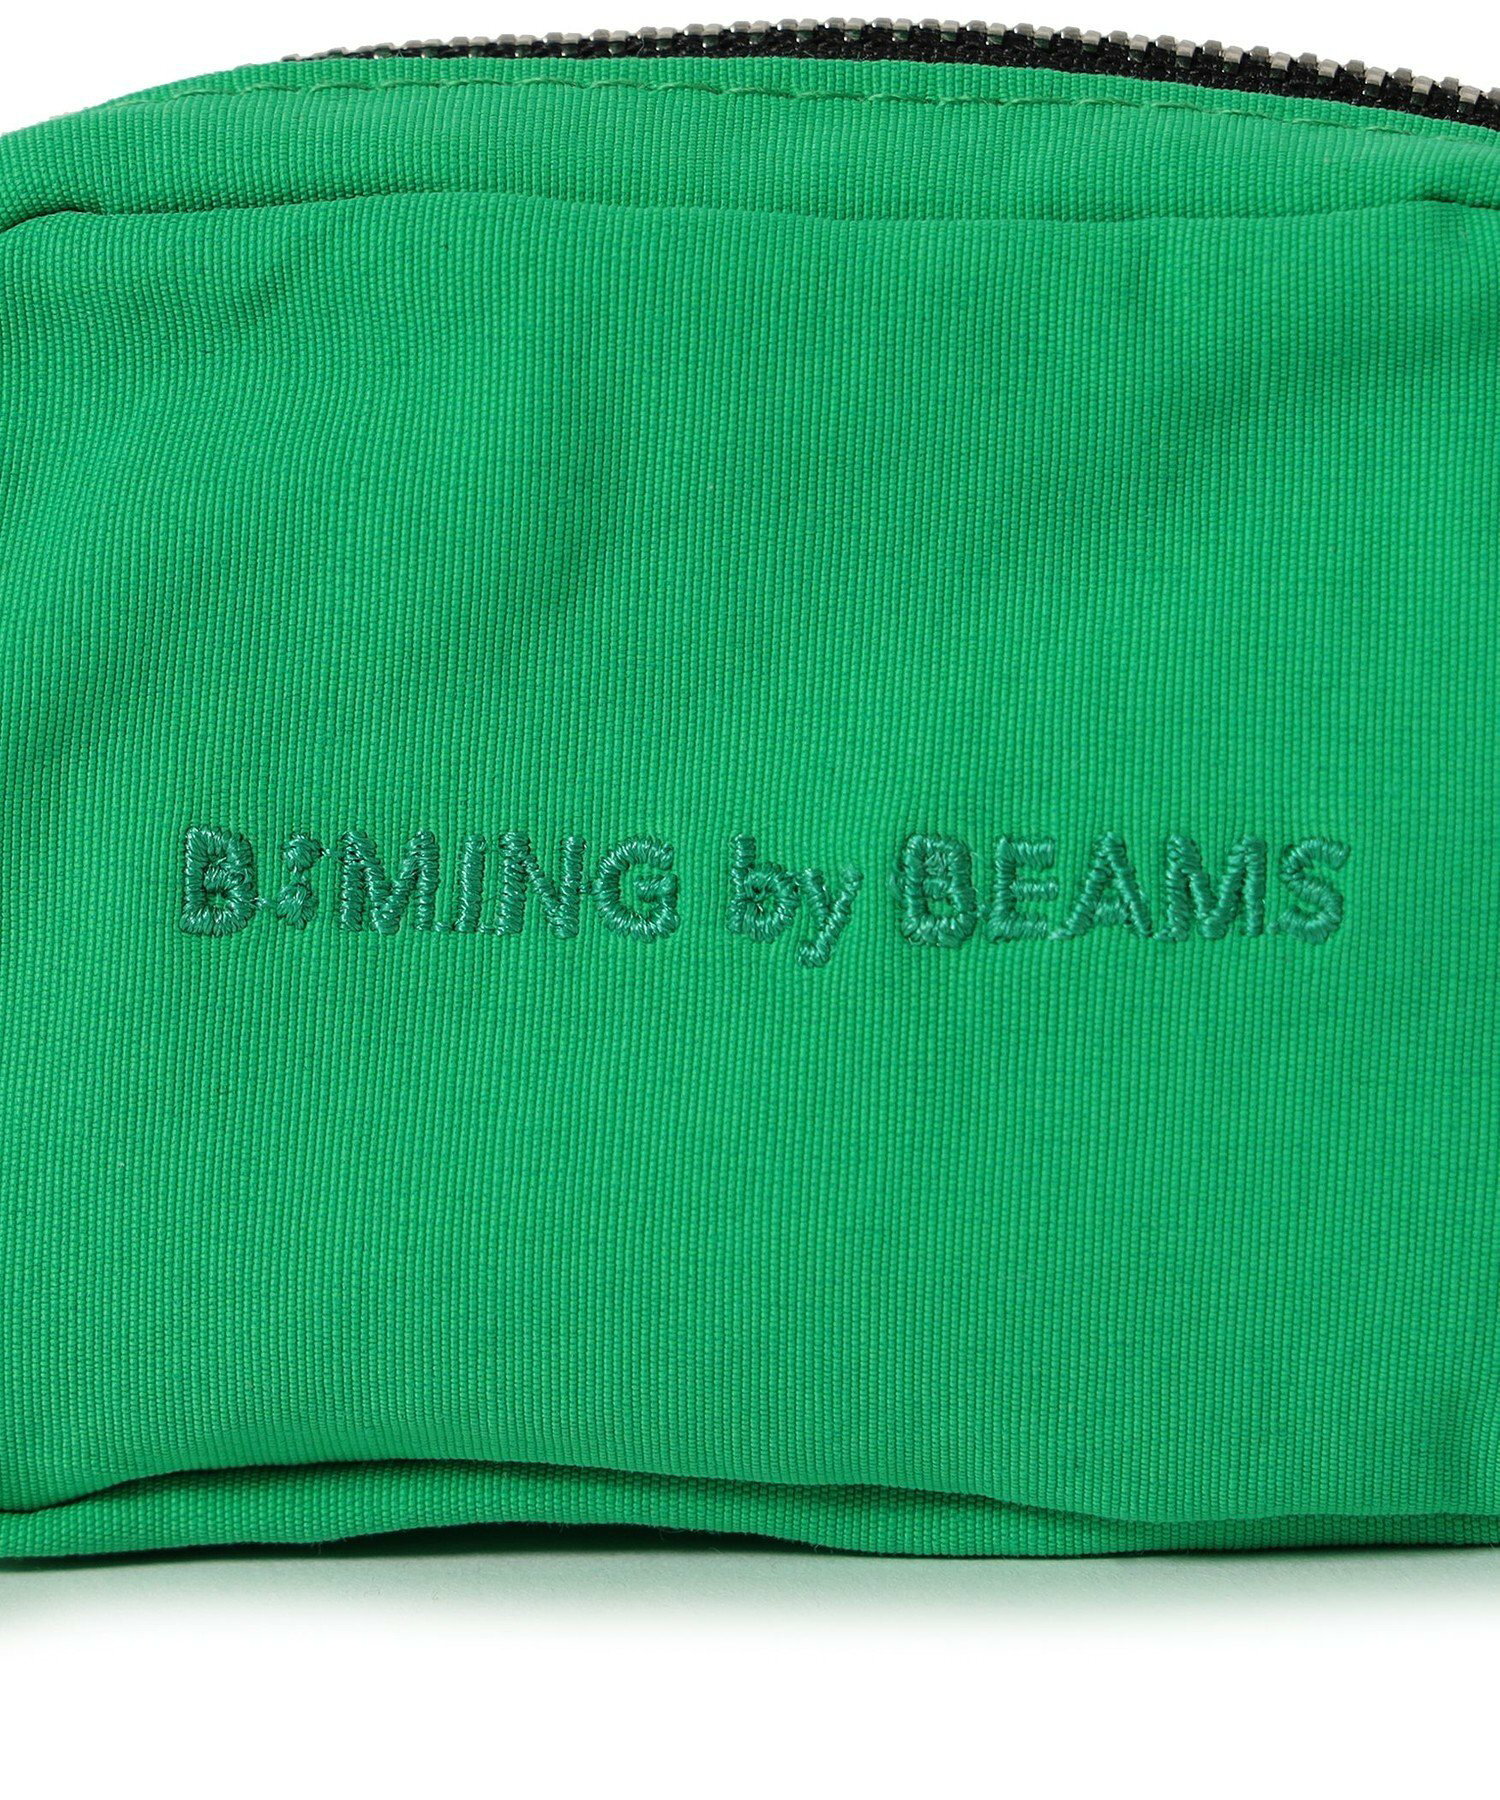 B:MING by BEAMS / スクエア ポーチ S